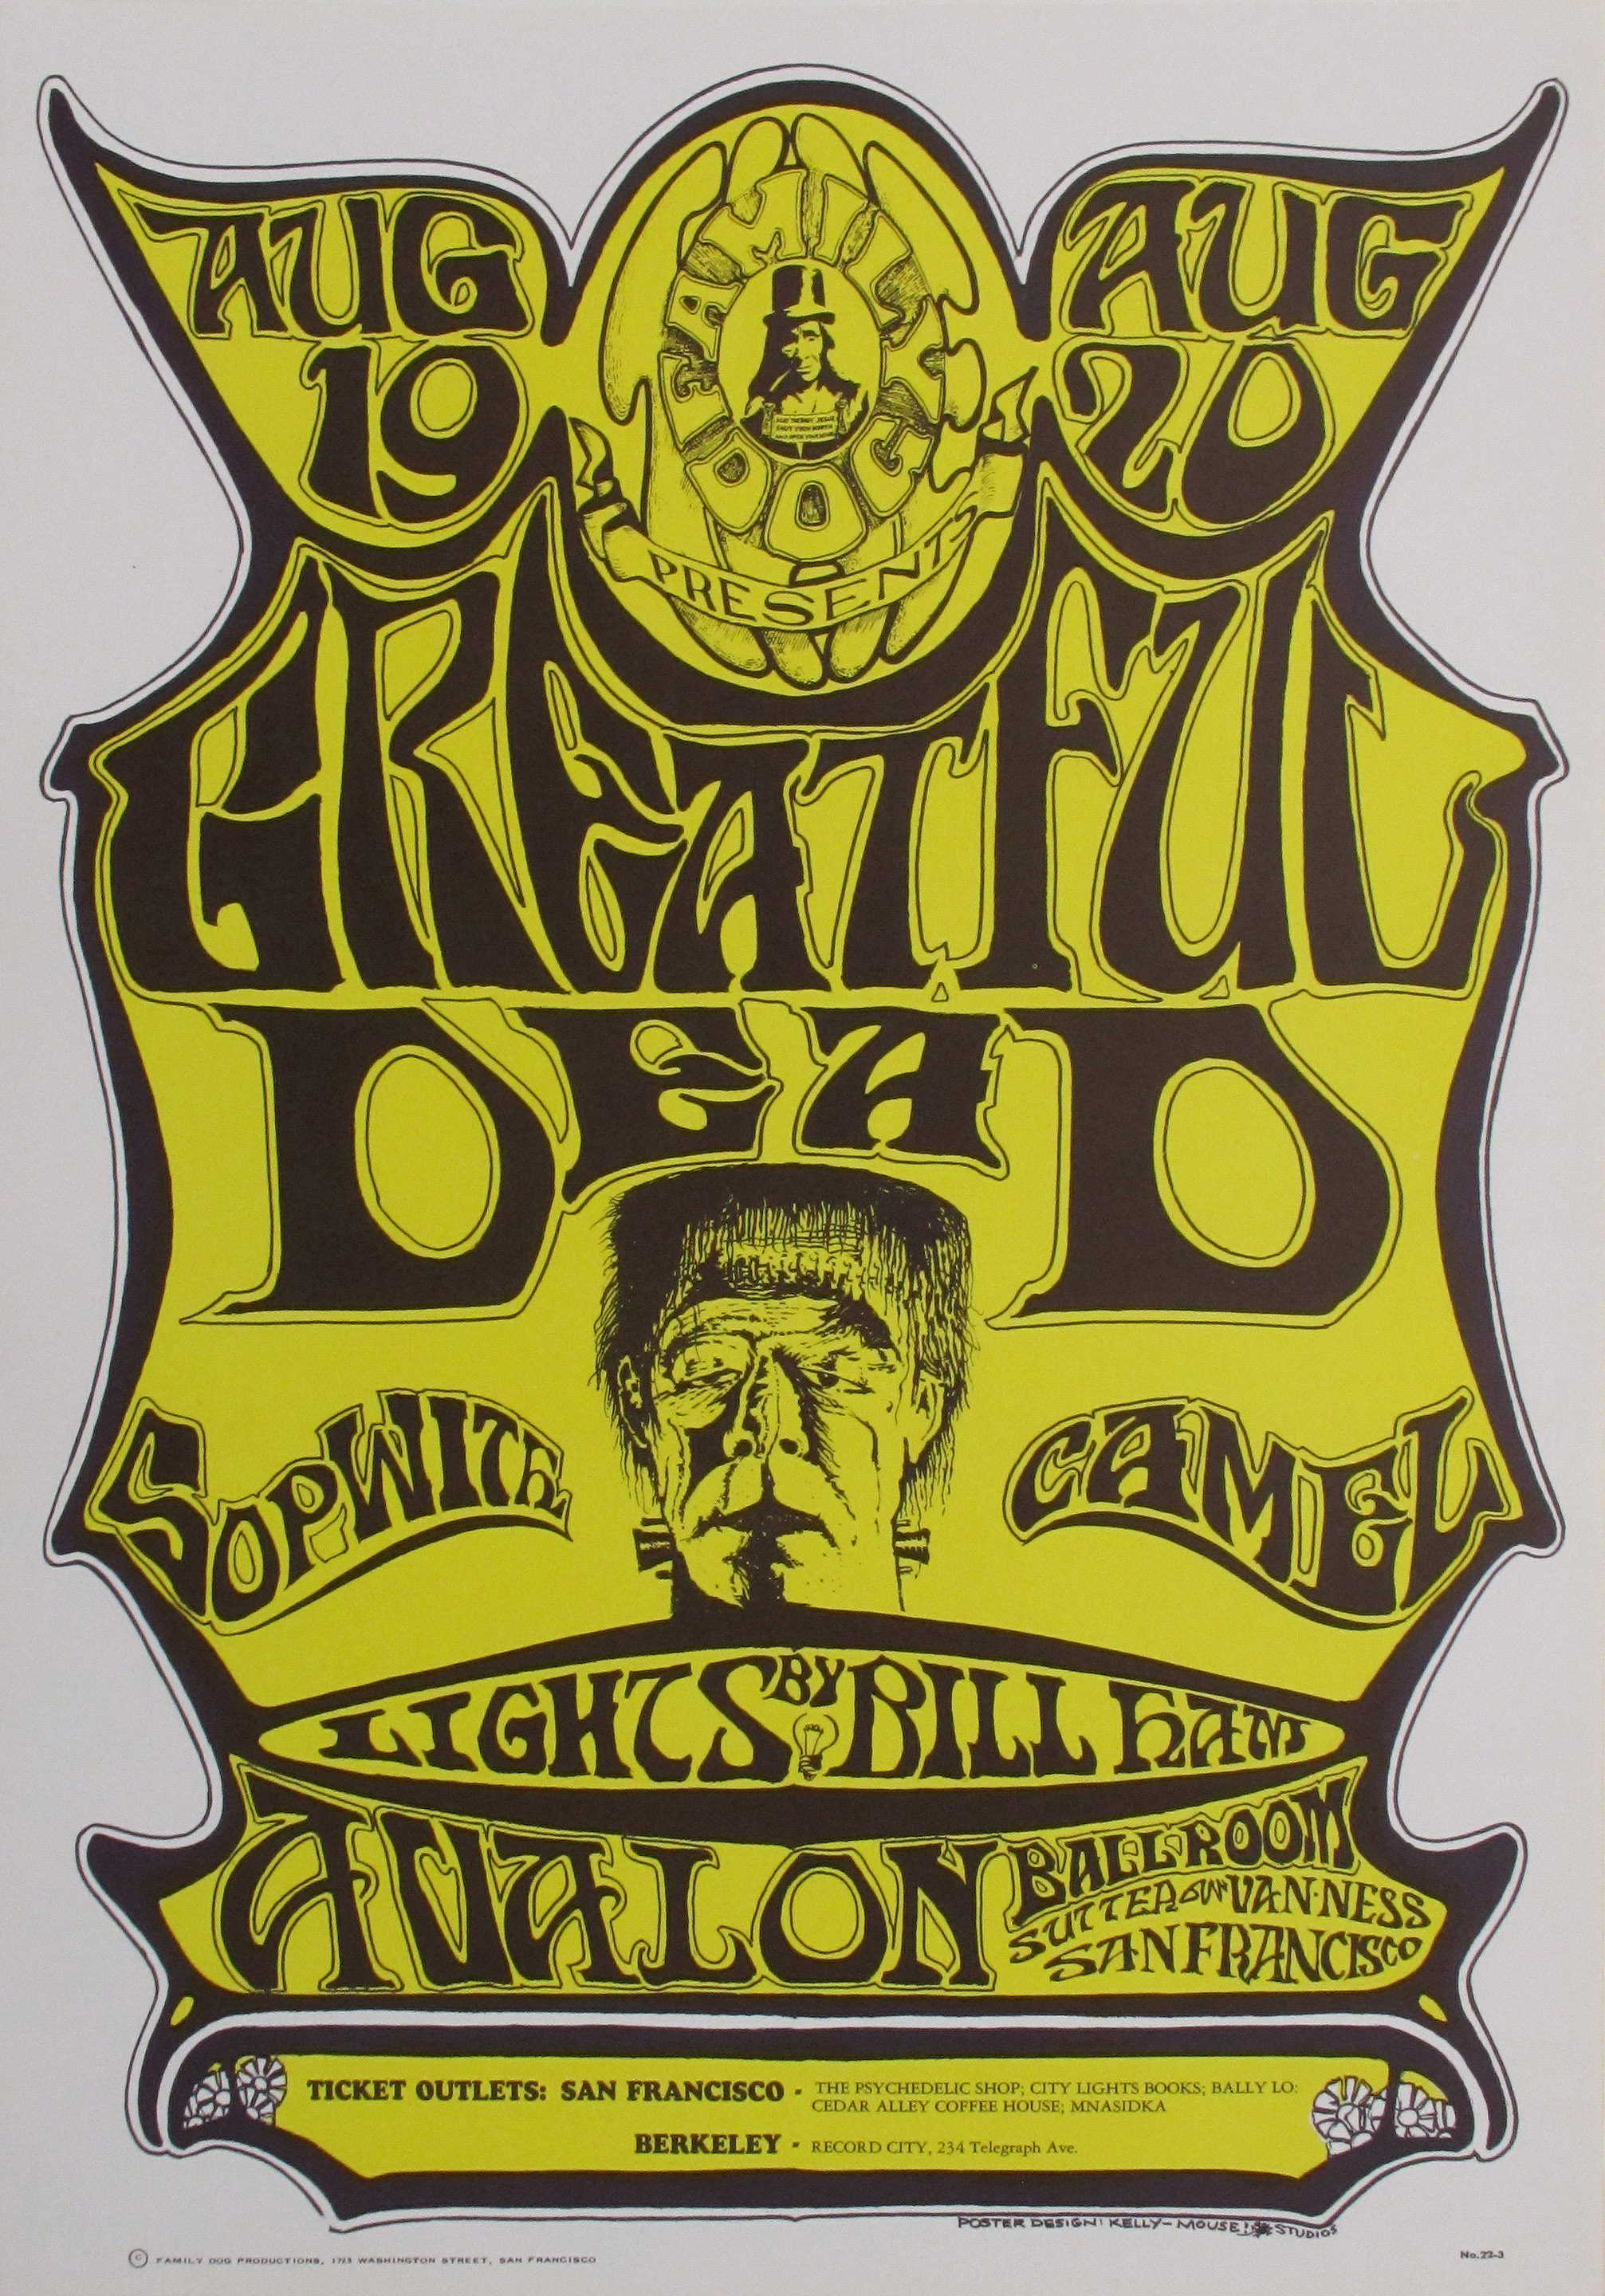 Grateful Dead & Sopwith Camel Original Concert Poster